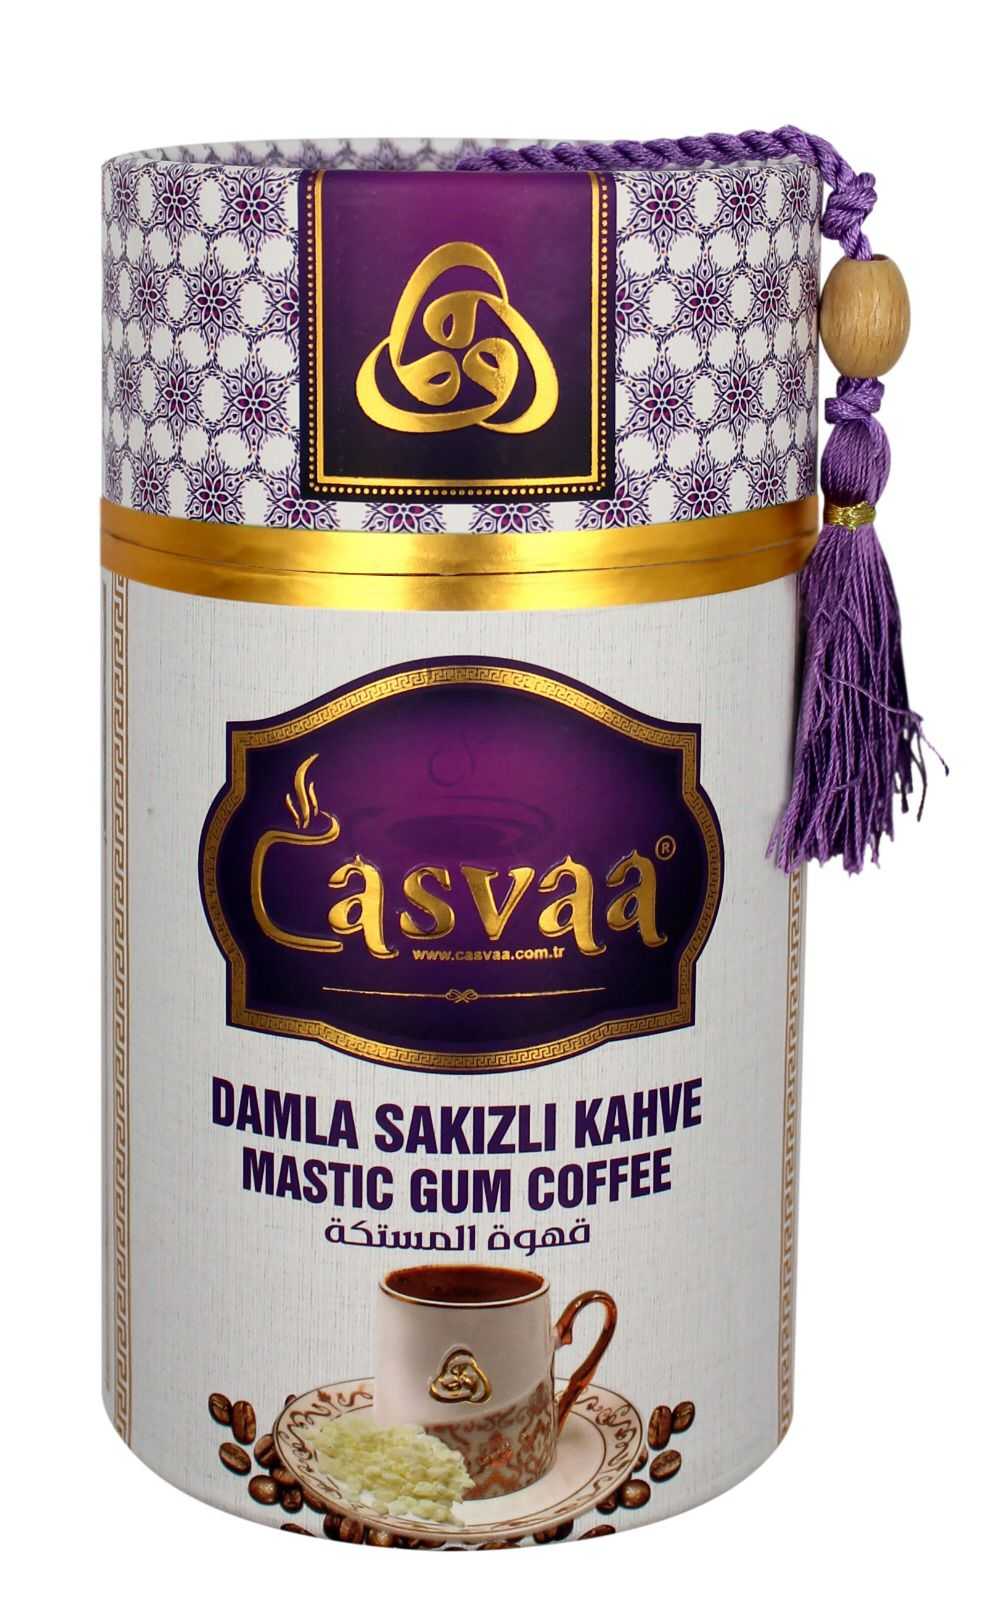 Casvaa Turkish Mastic Gum Coffee 250g (8,81oz)